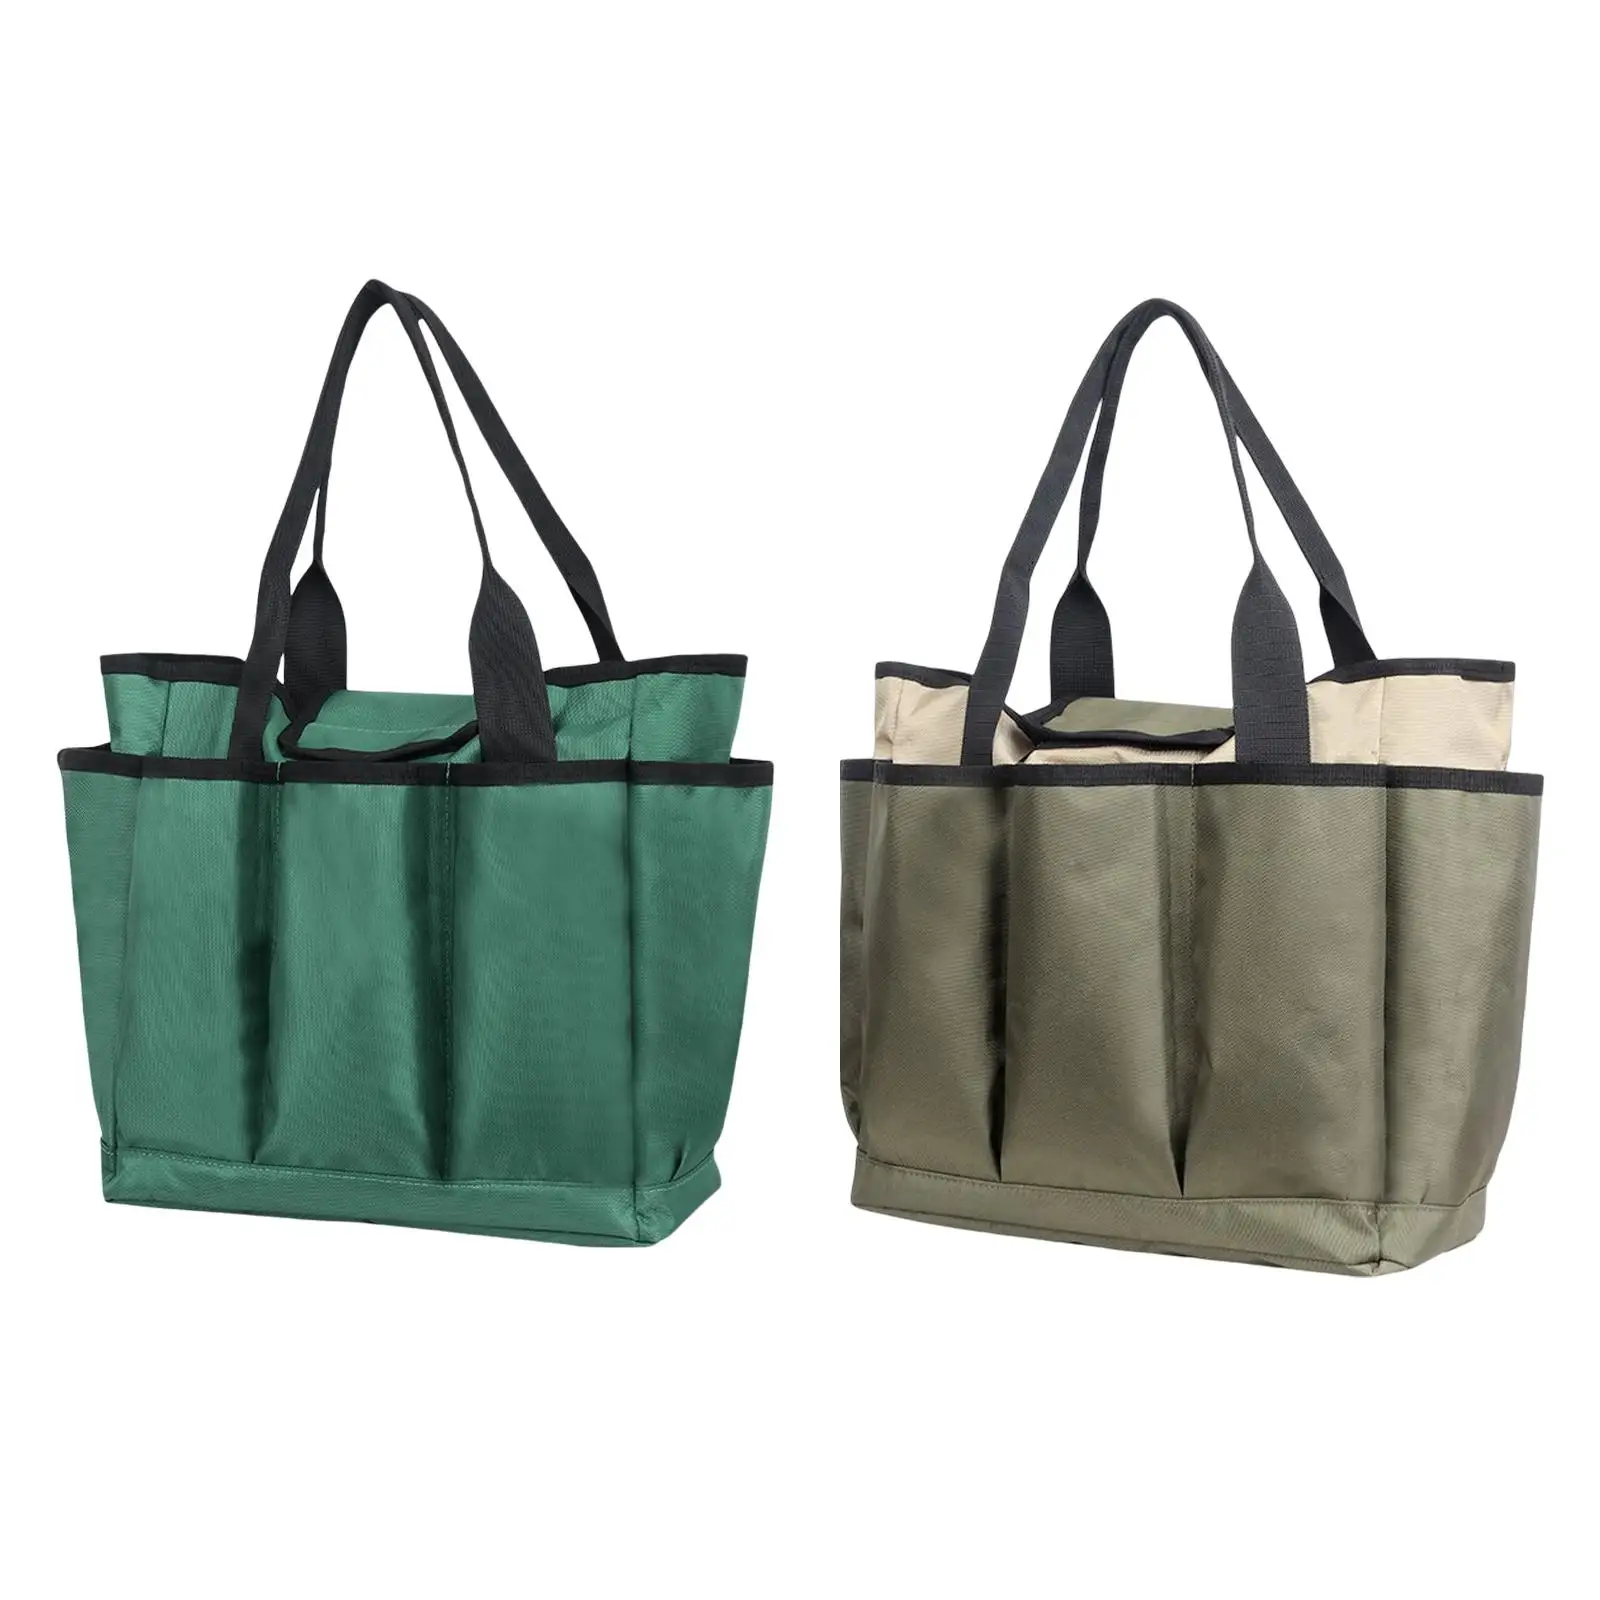 Gardening Tote Bag Portable Handle Multifunctional Handbag for Lawn Home